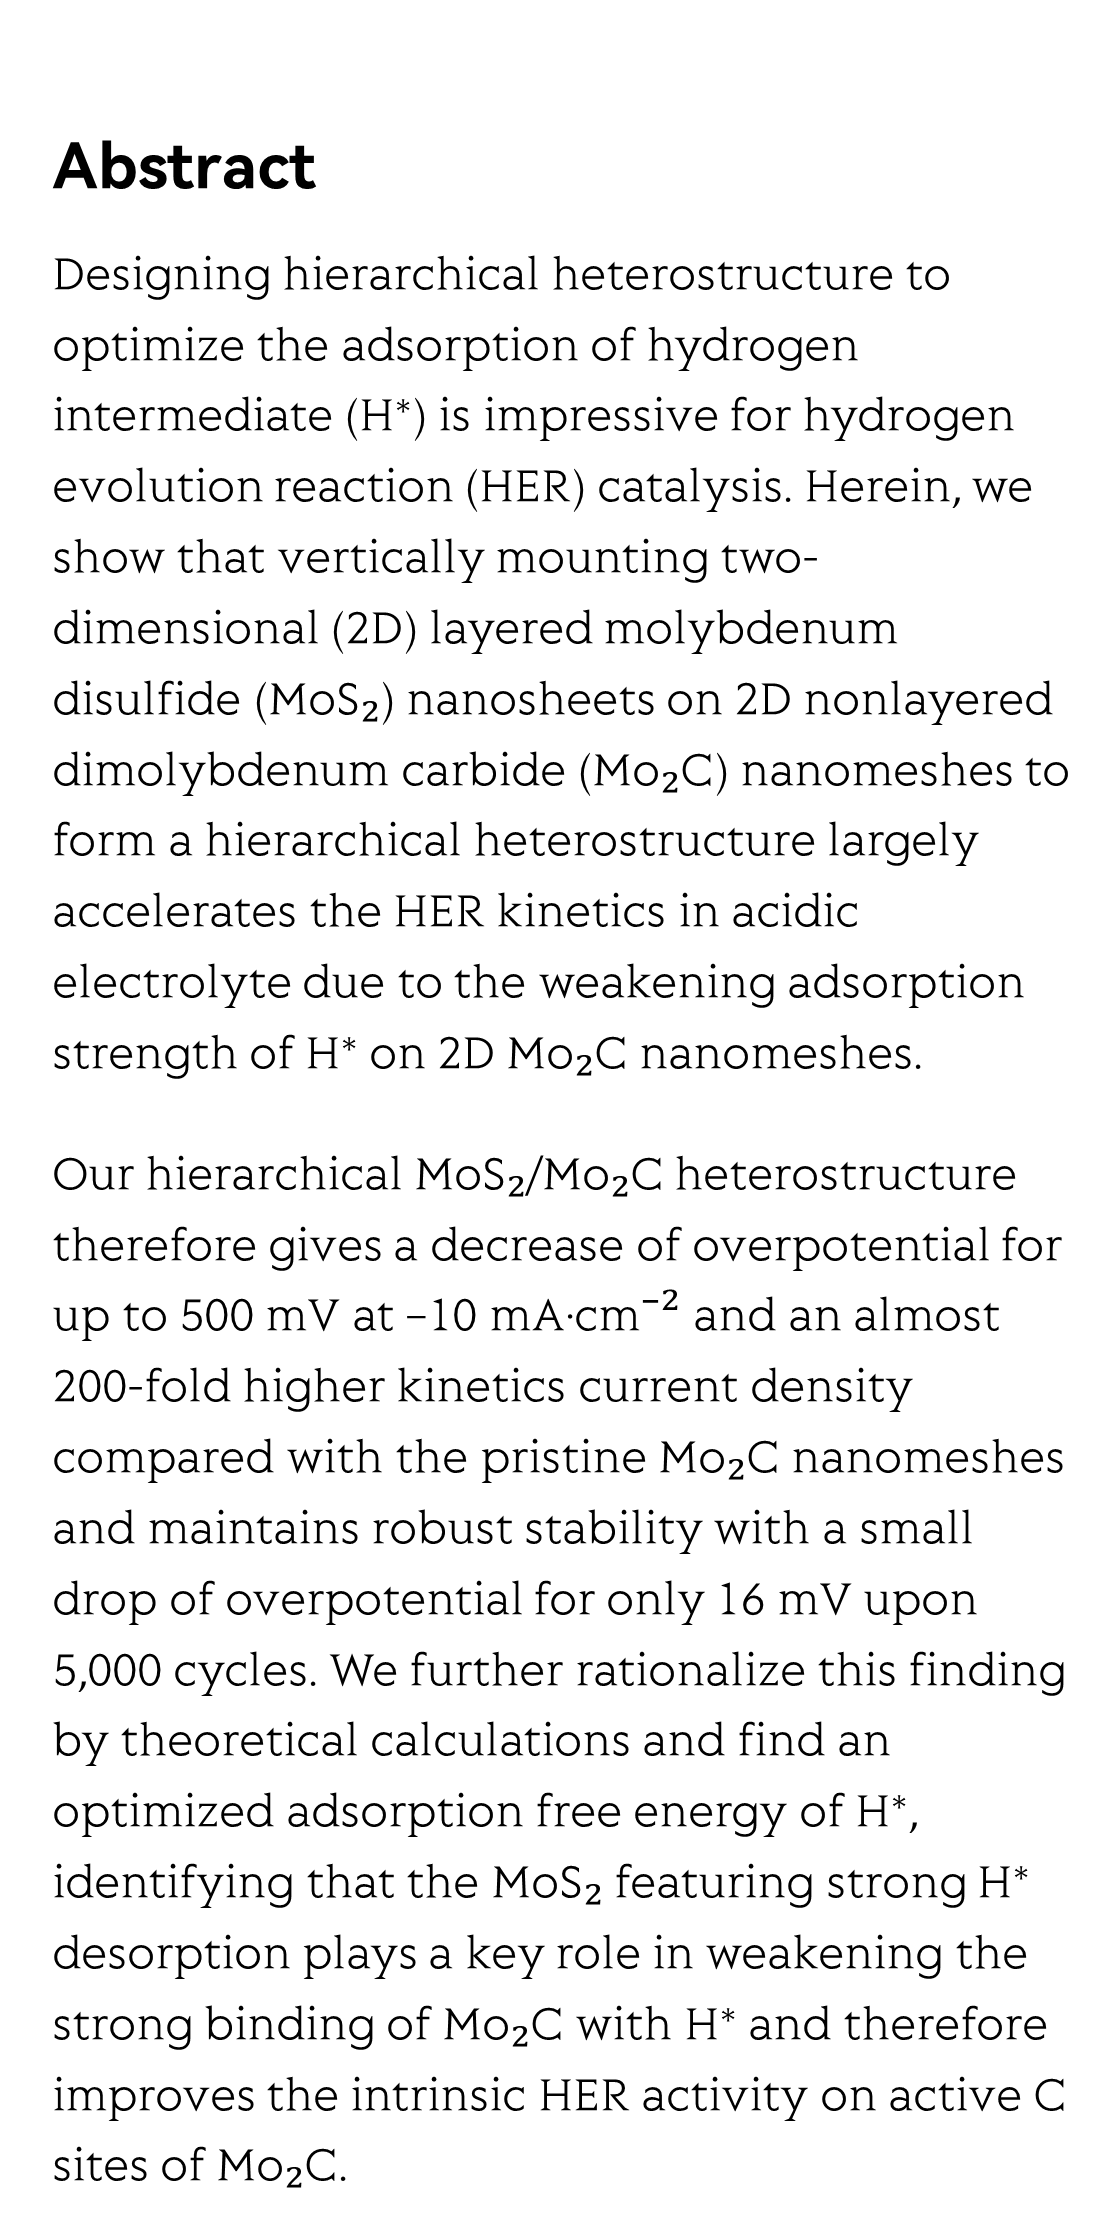 Vertically mounting molybdenum disulfide nanosheets on dimolybdenum carbide nanomeshes enables efficient hydrogen evolution_2